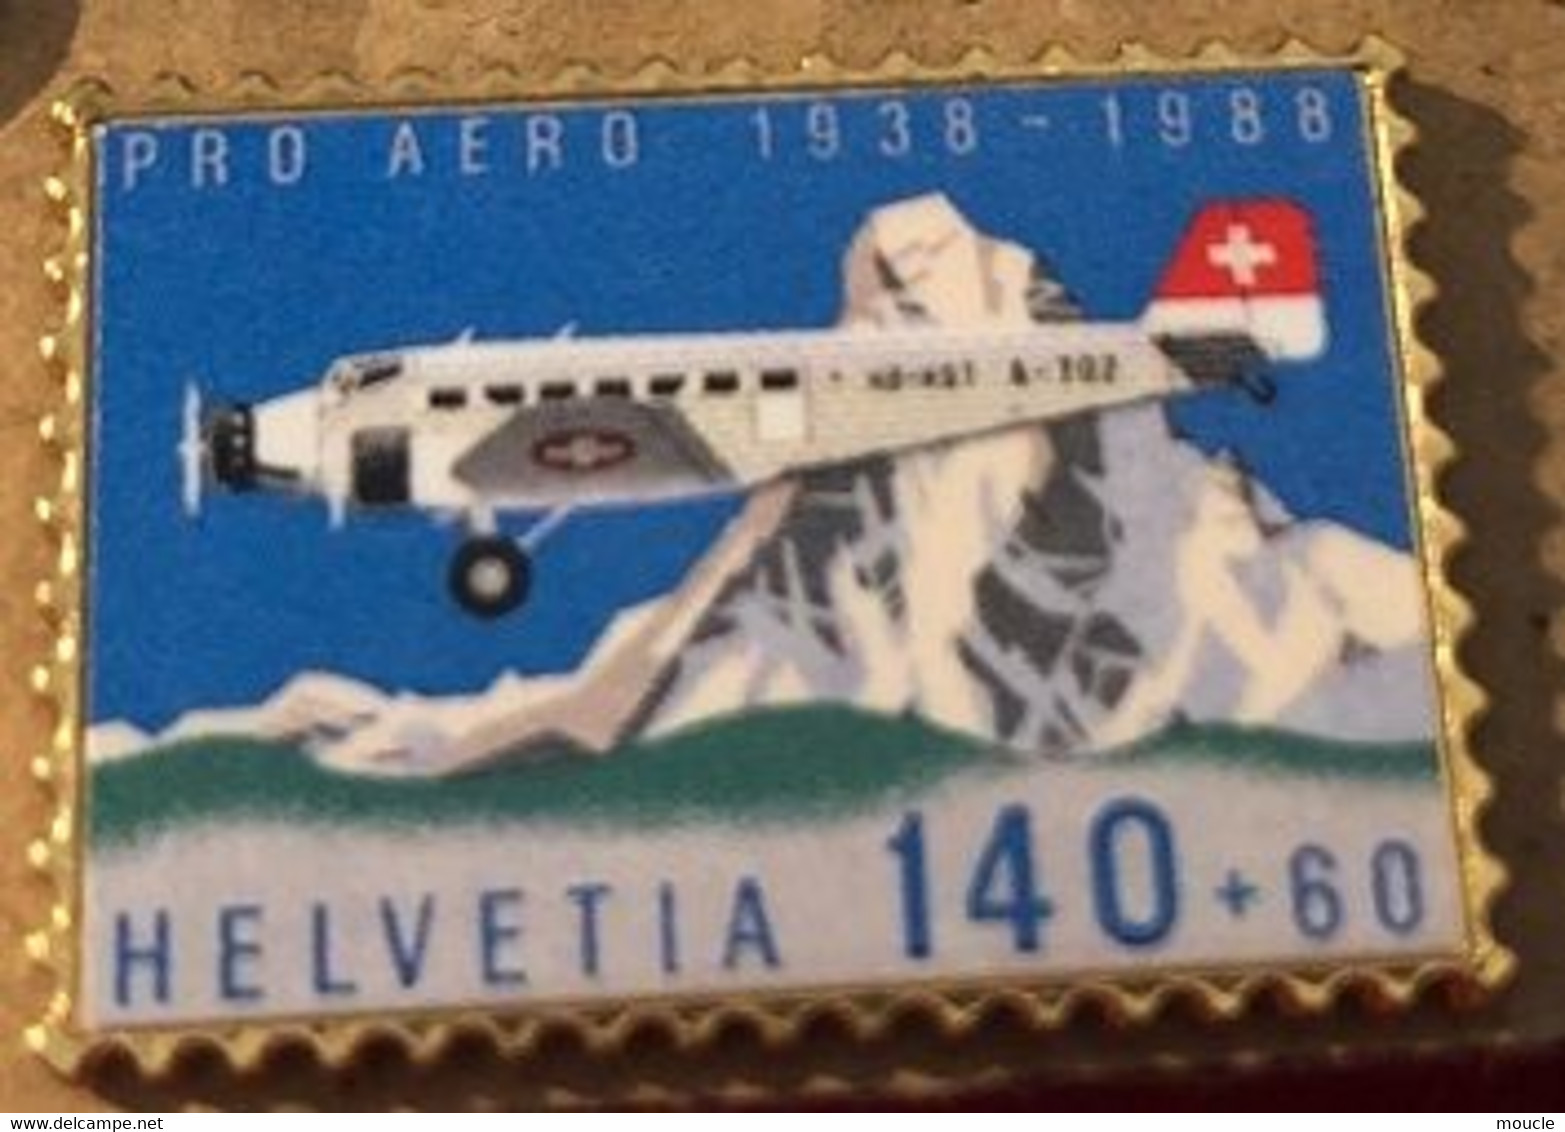 AVION - PLANE - FLUGZEUG - AEREO - HELVETIA 140+60 - CERVIN - PRO AERO 1938/1988  - SUISSE - SCHWEIZ -SWITZERLAND-(BLEU) - Avions